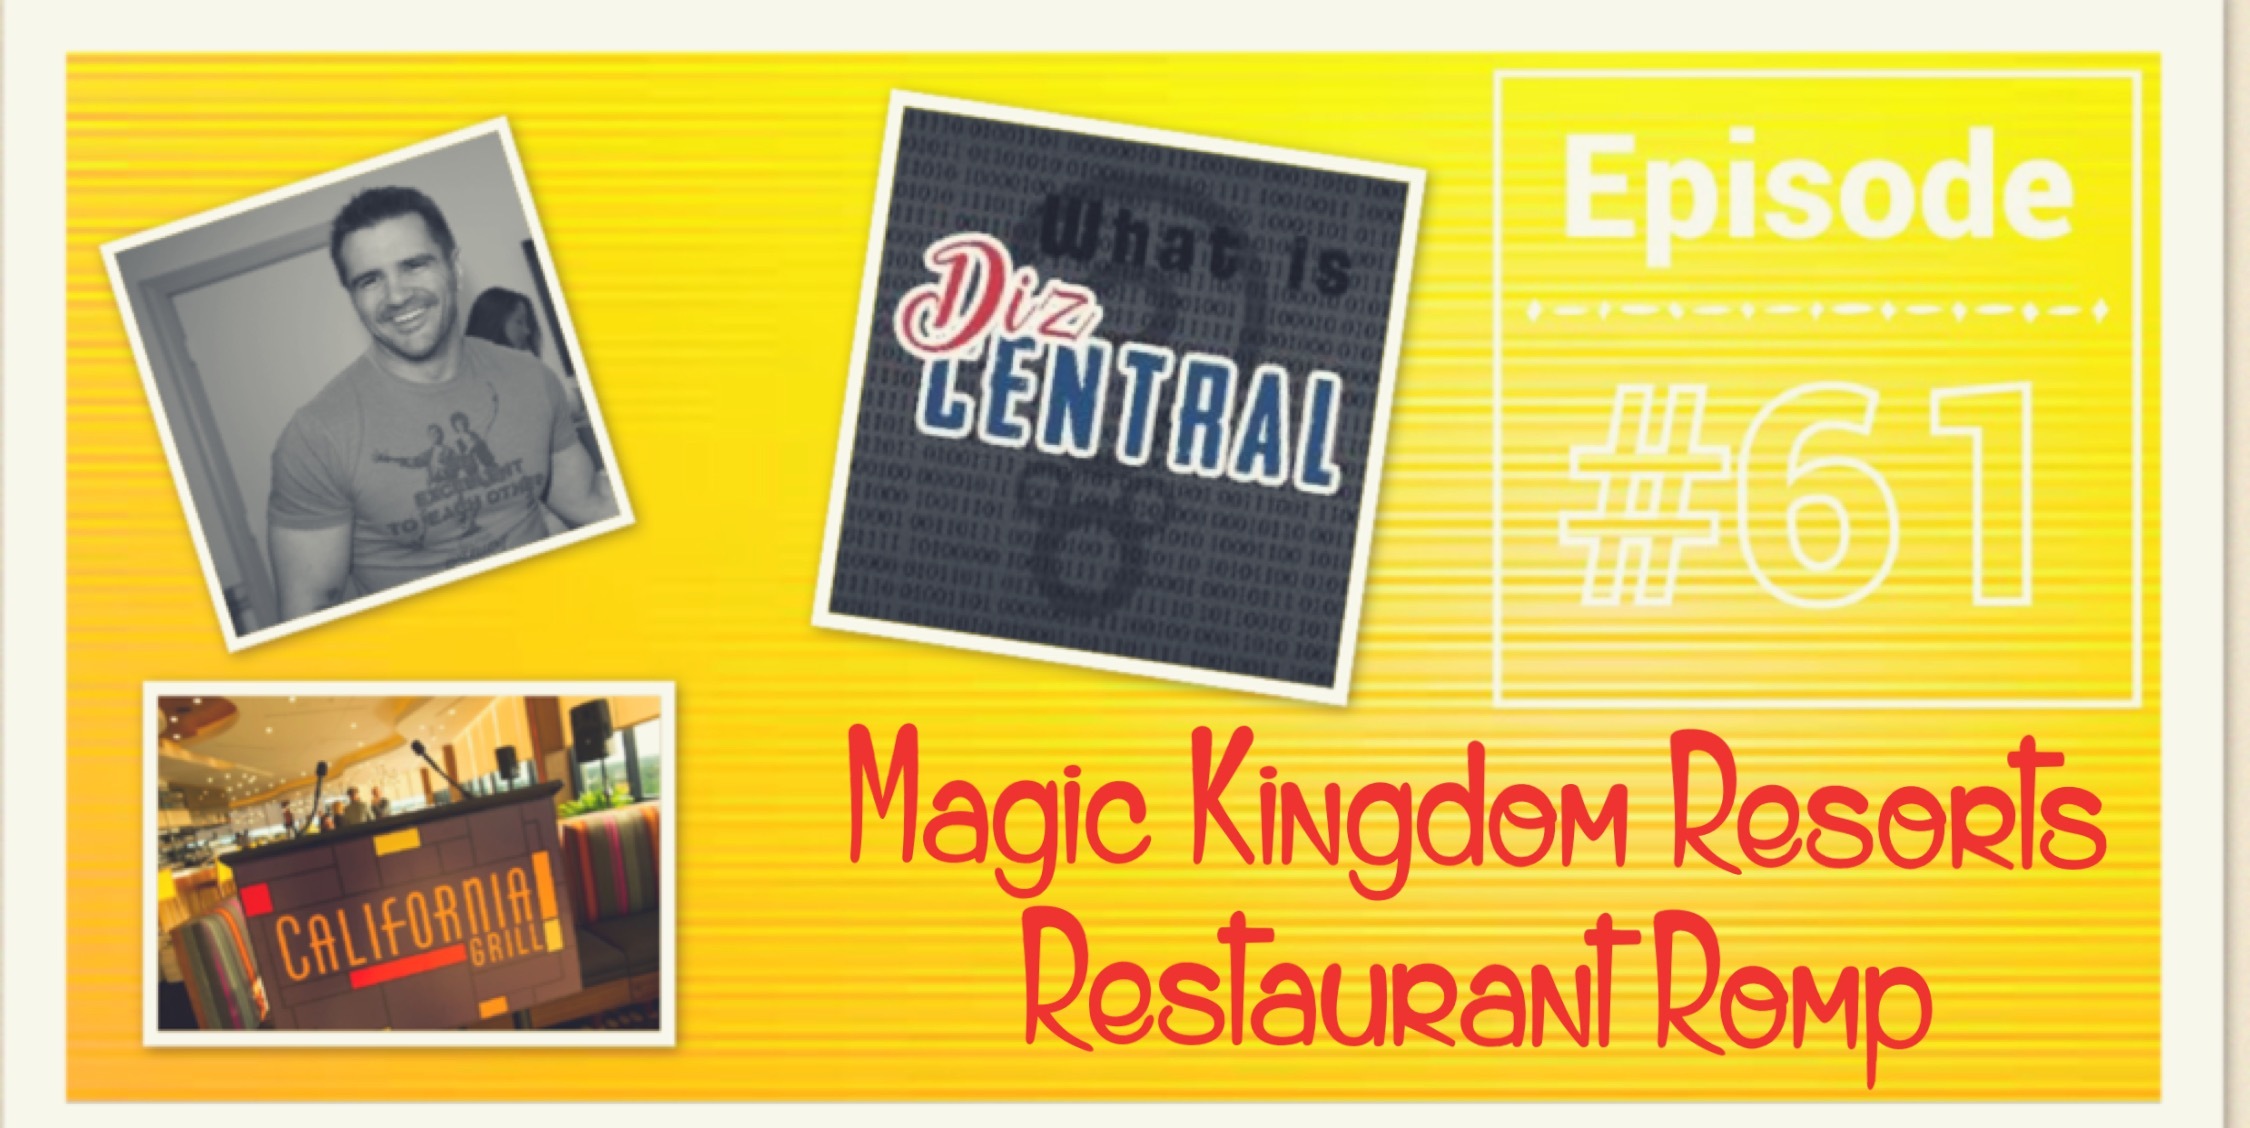 TMDP Episode #61 Magic Kingdom Resorts Restaurant Romp